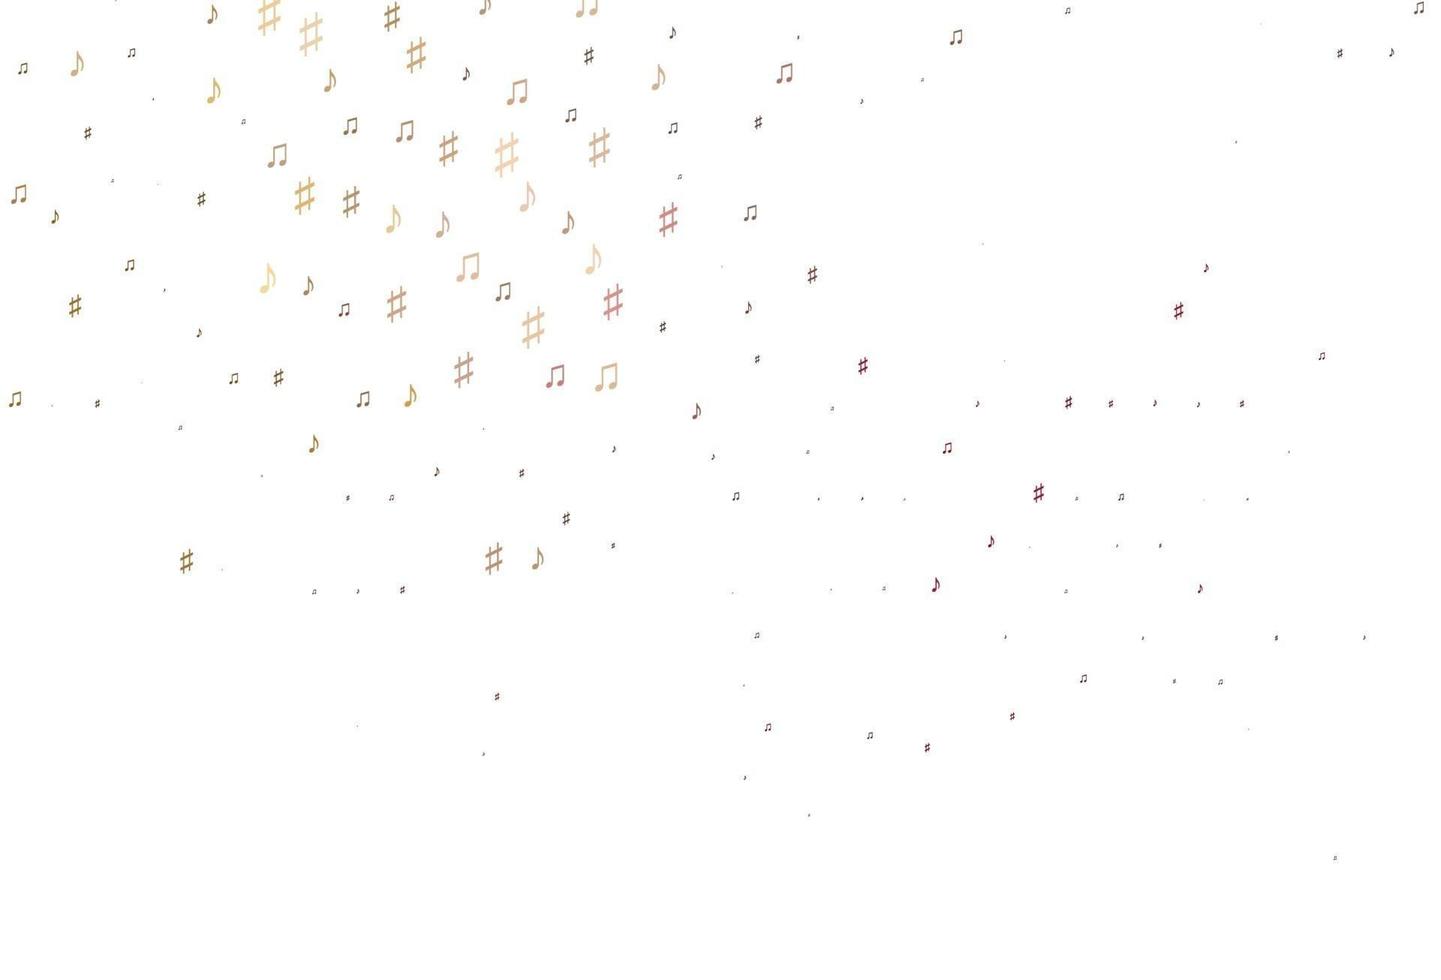 rosa claro, textura vectorial amarilla con notas musicales. vector